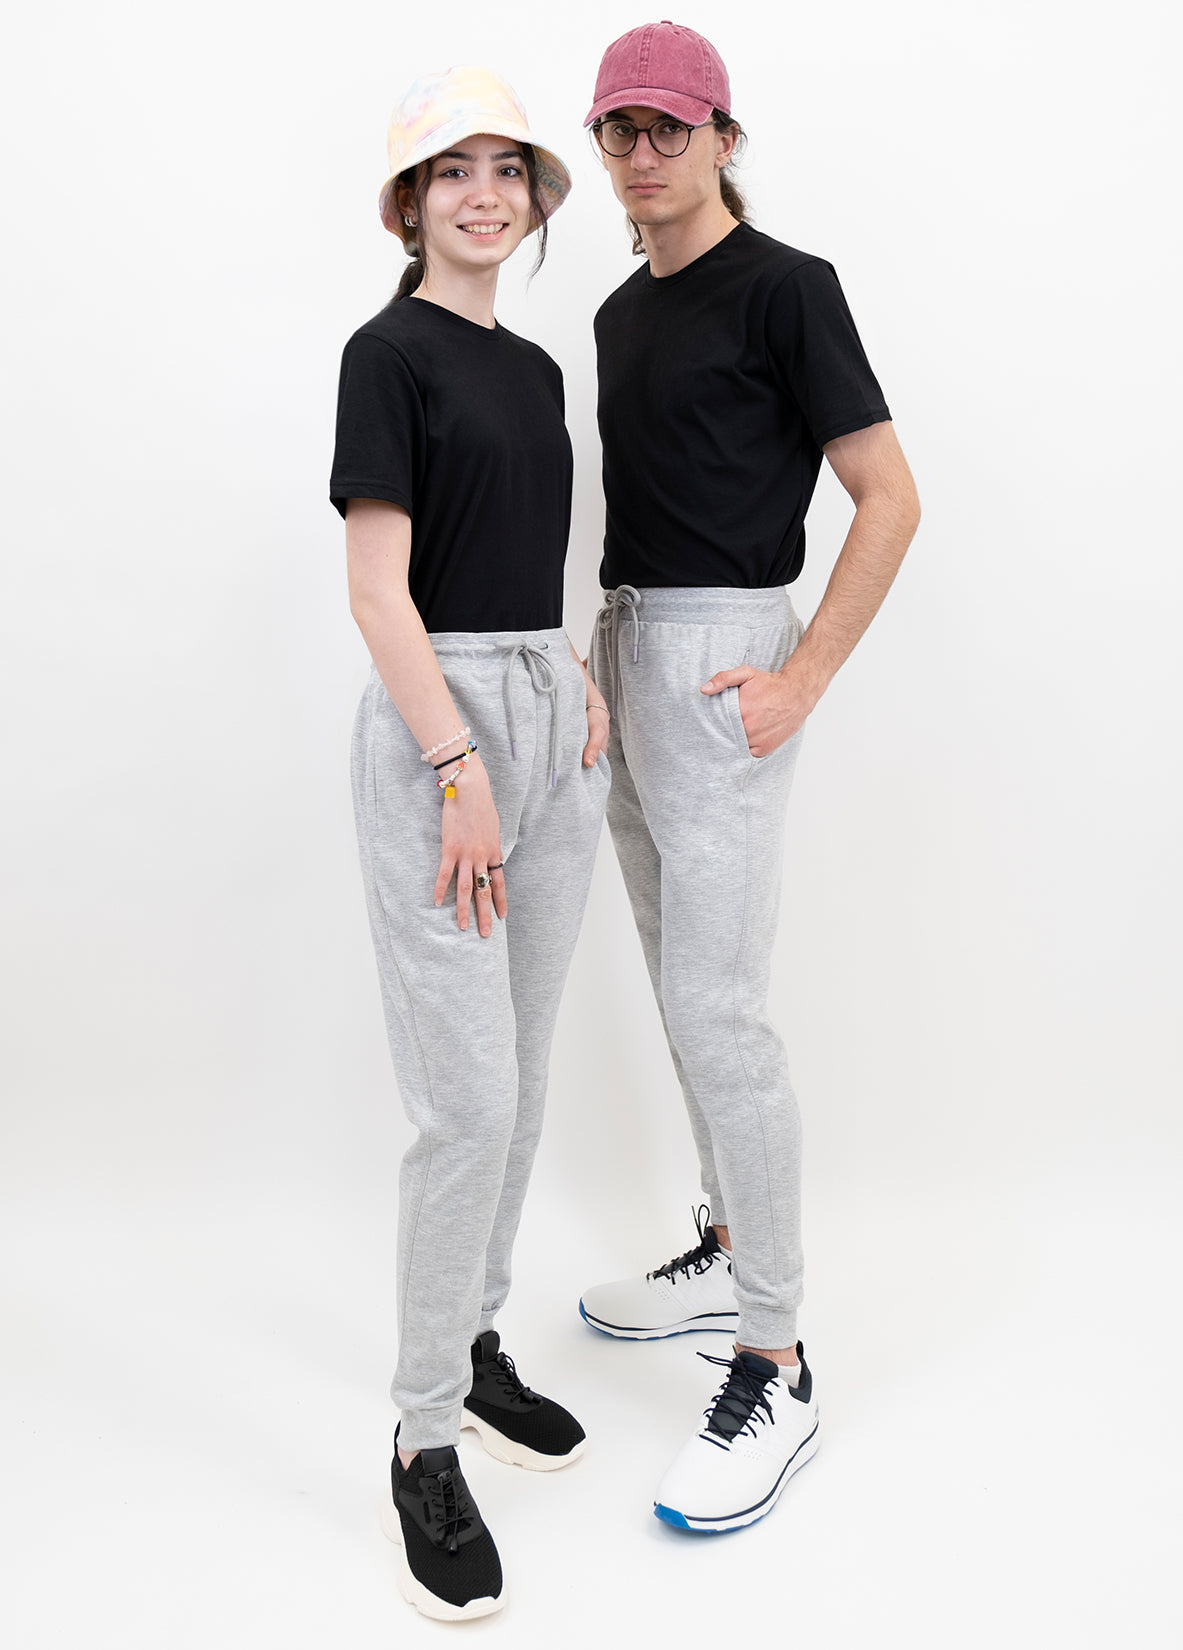 NEW MEN'S 2021 SPORTS JOGGING PANT ($25) | Mens fashion sweaters, Fashion  joggers, Mens pants fashion